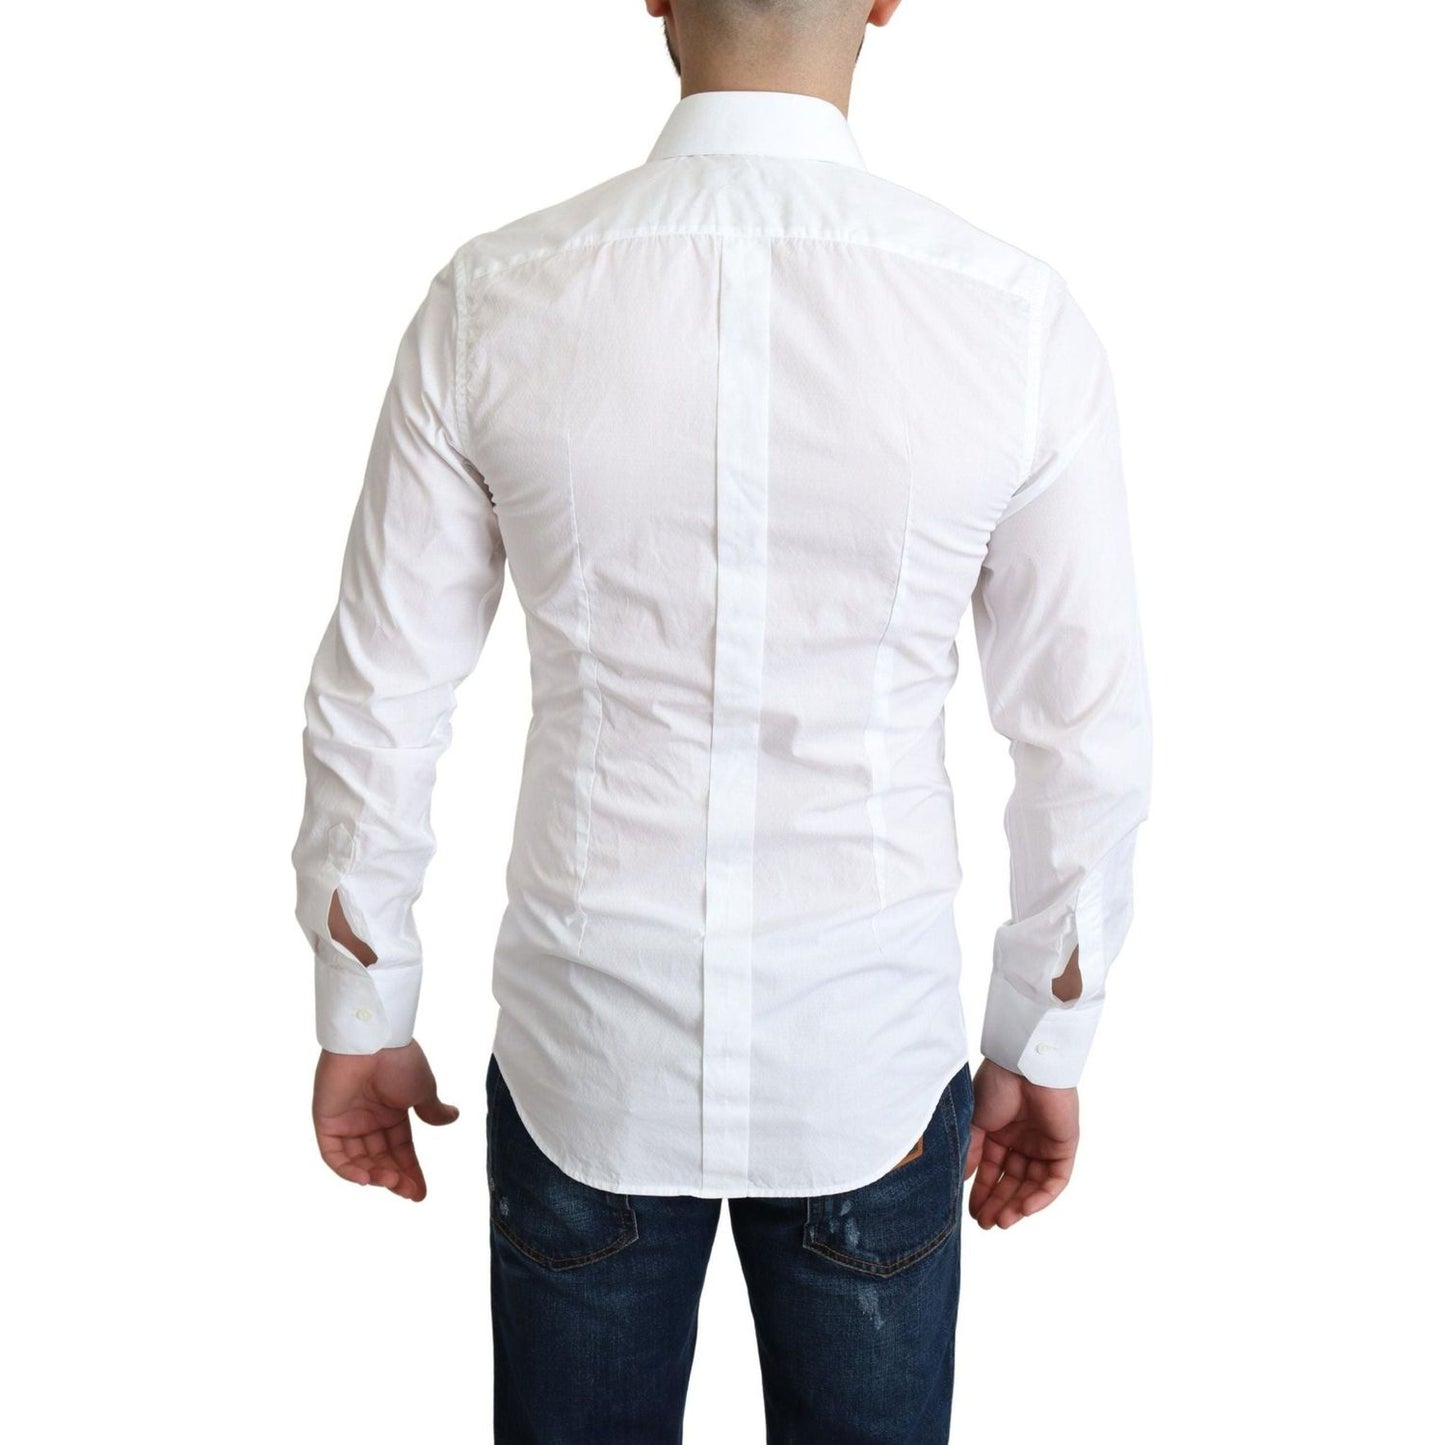 Dolce & Gabbana Elegant White Cotton Dress Shirt white-cotton-long-sleeves-men-formal-shirt